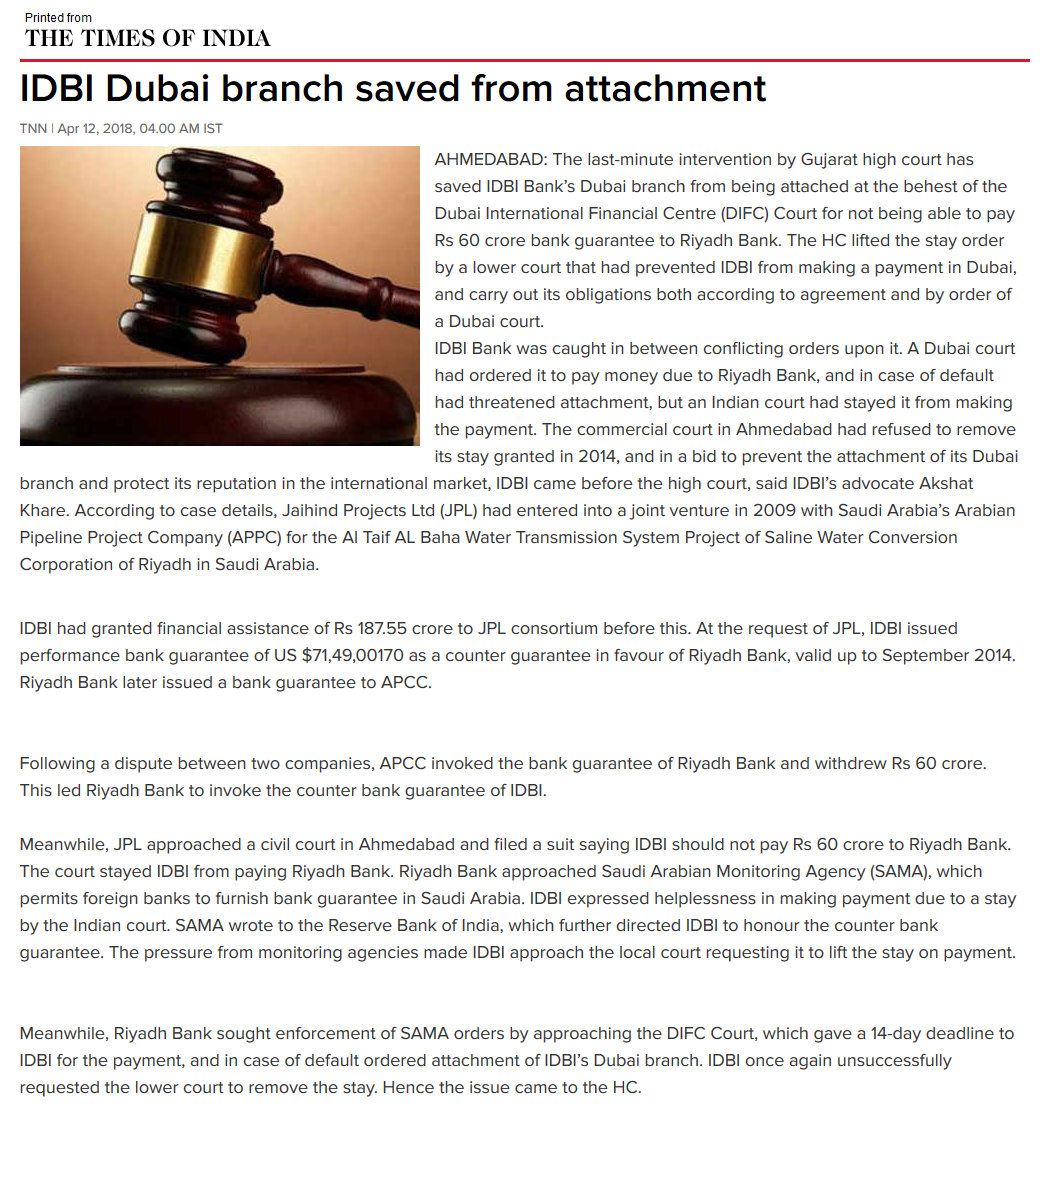 IDBI Dubai branch saved from attachment